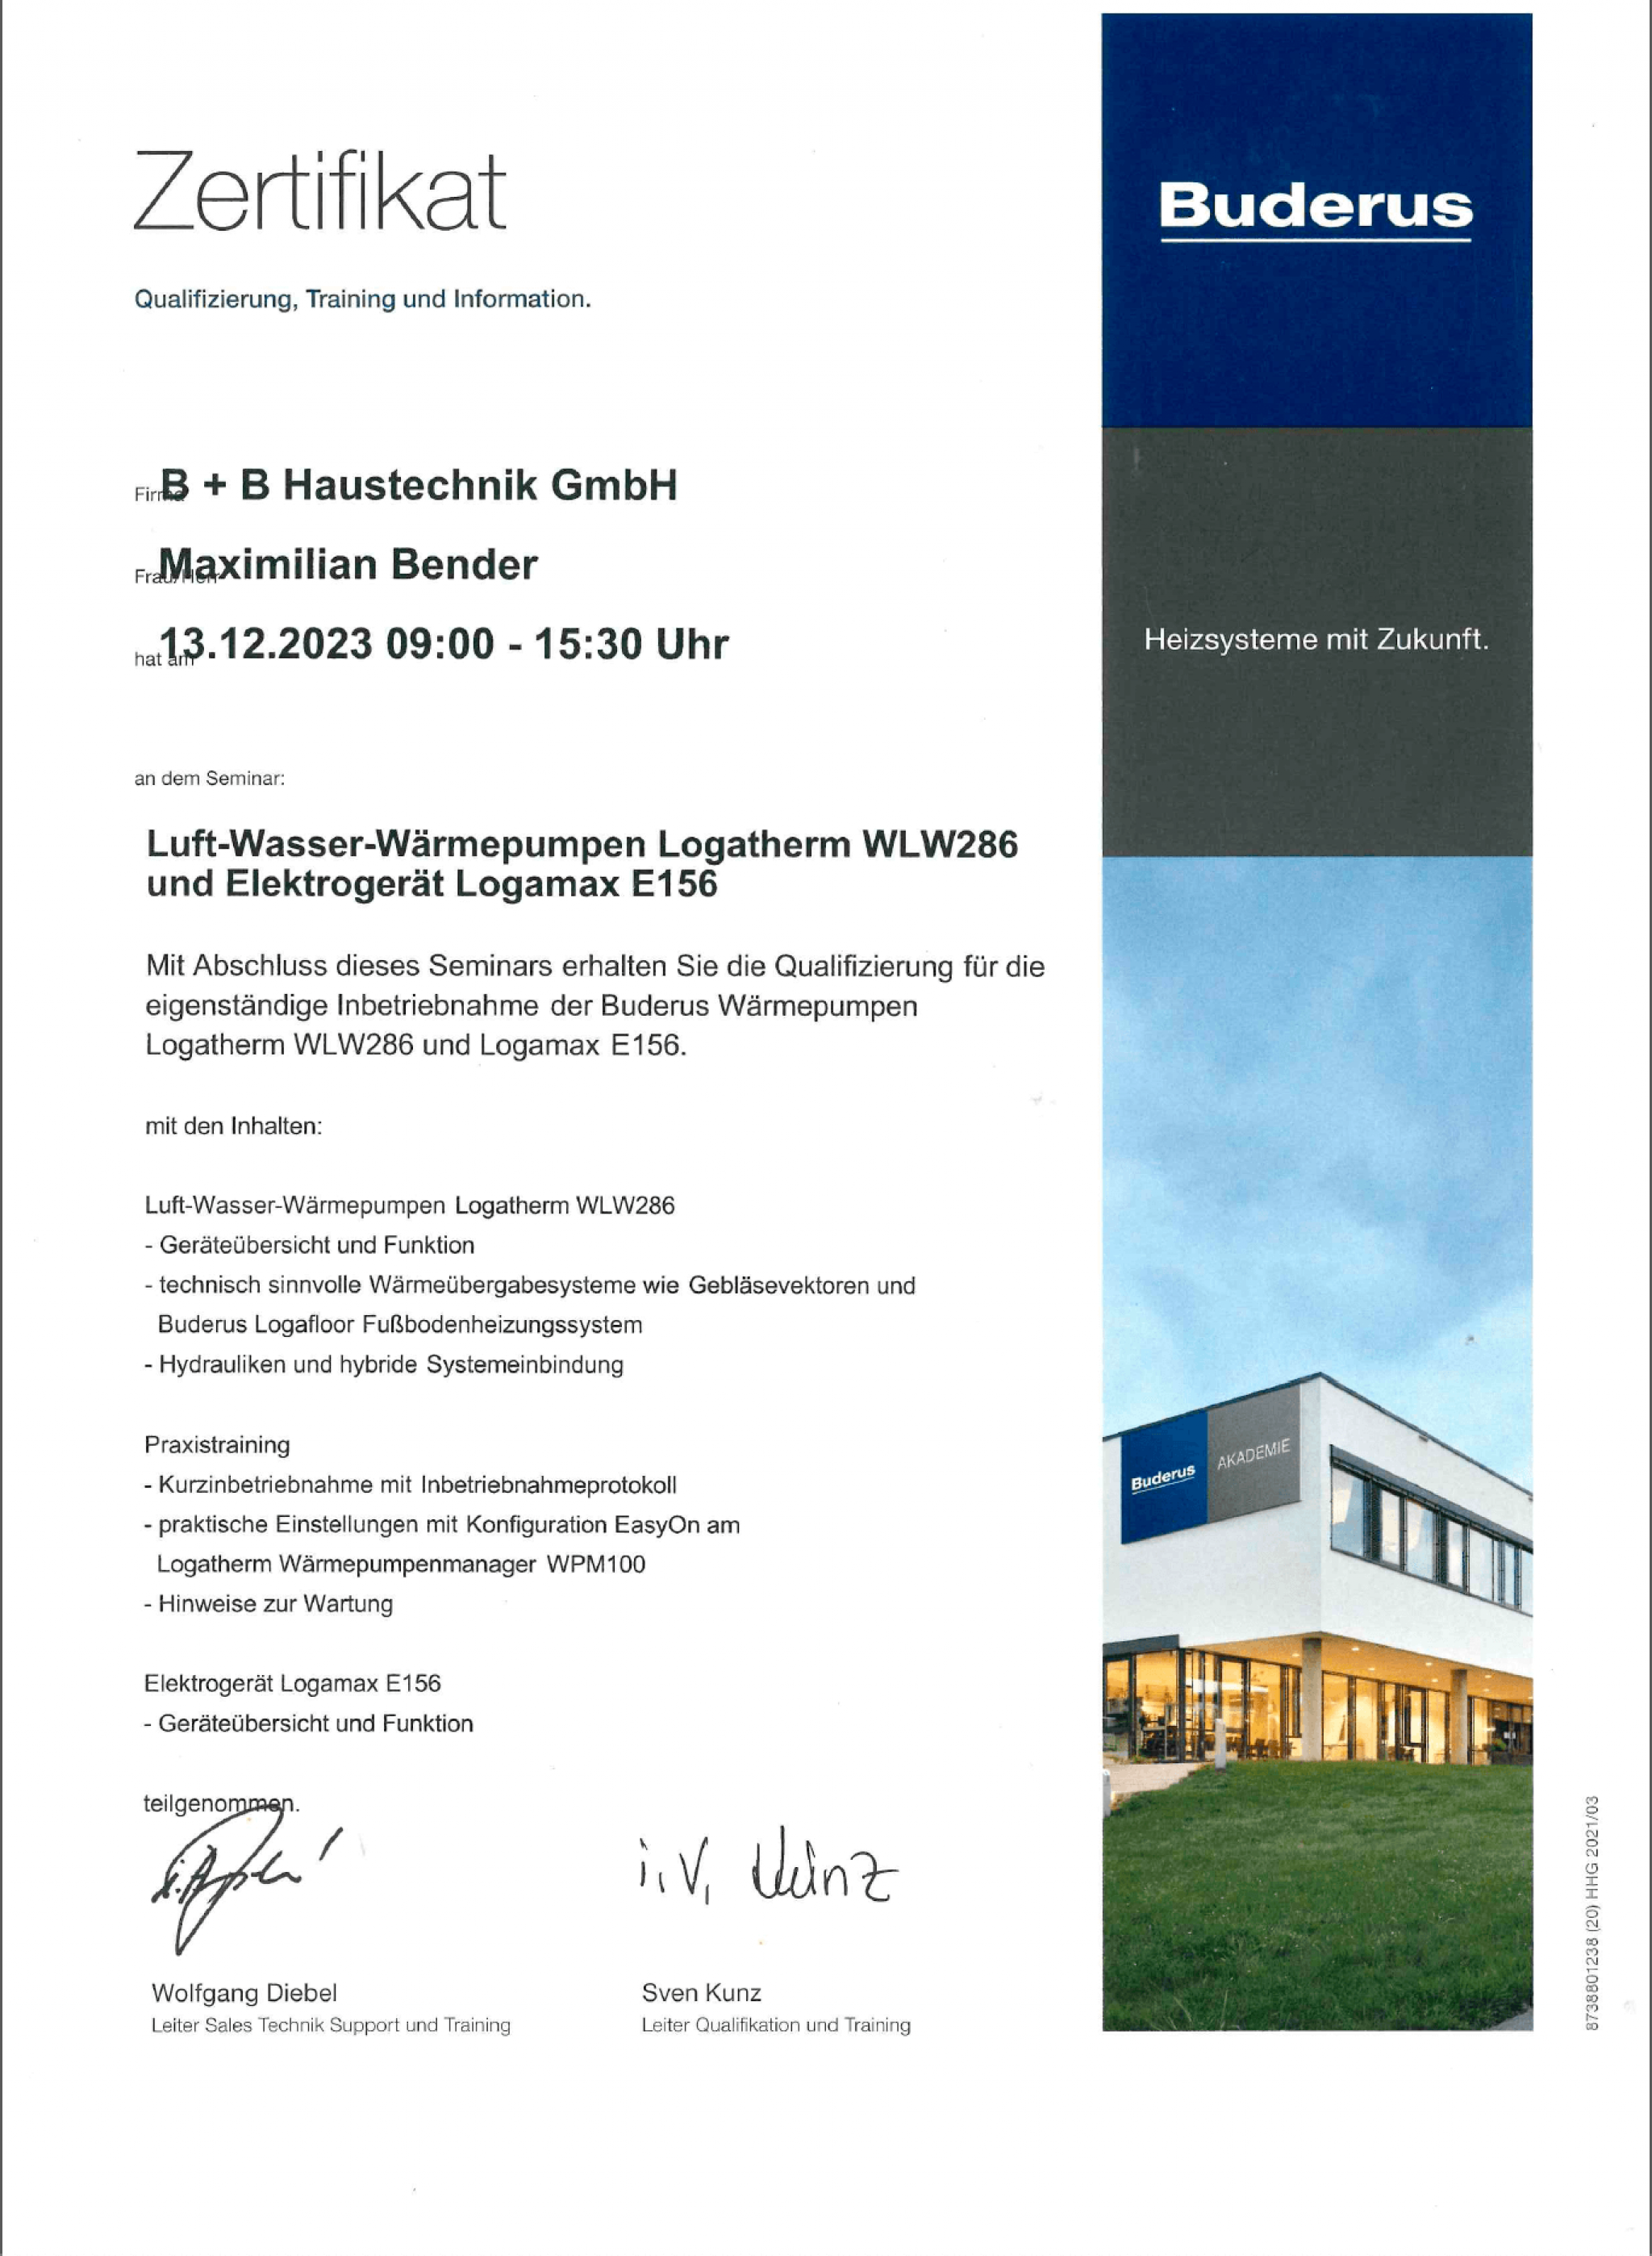 B & B Haustechnik GmbH - Zertifikat Buderus Wärmepumpe